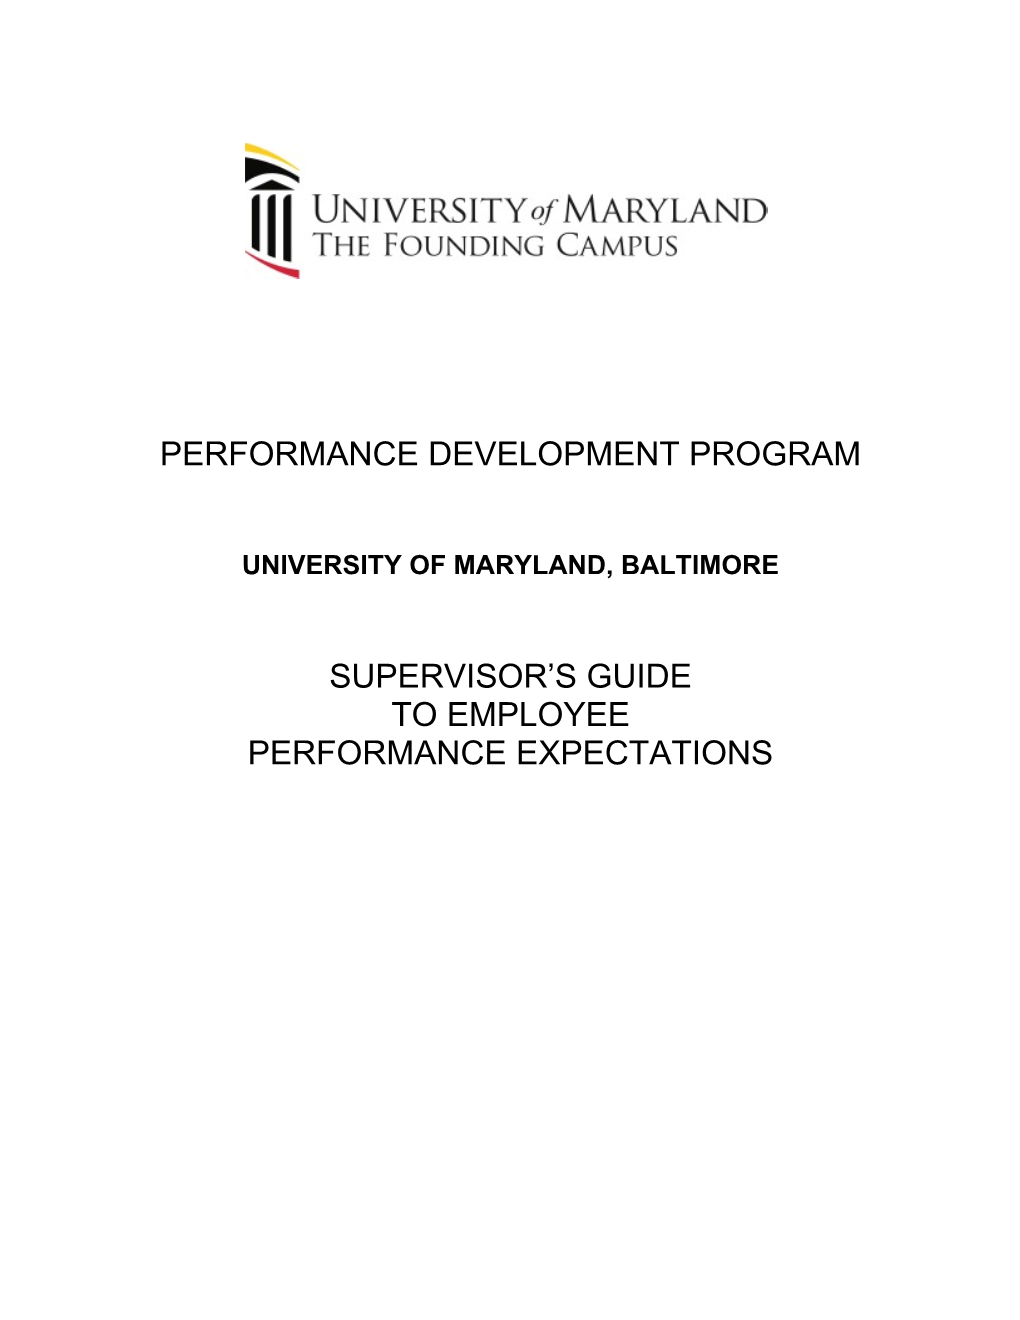 Performance Development Program